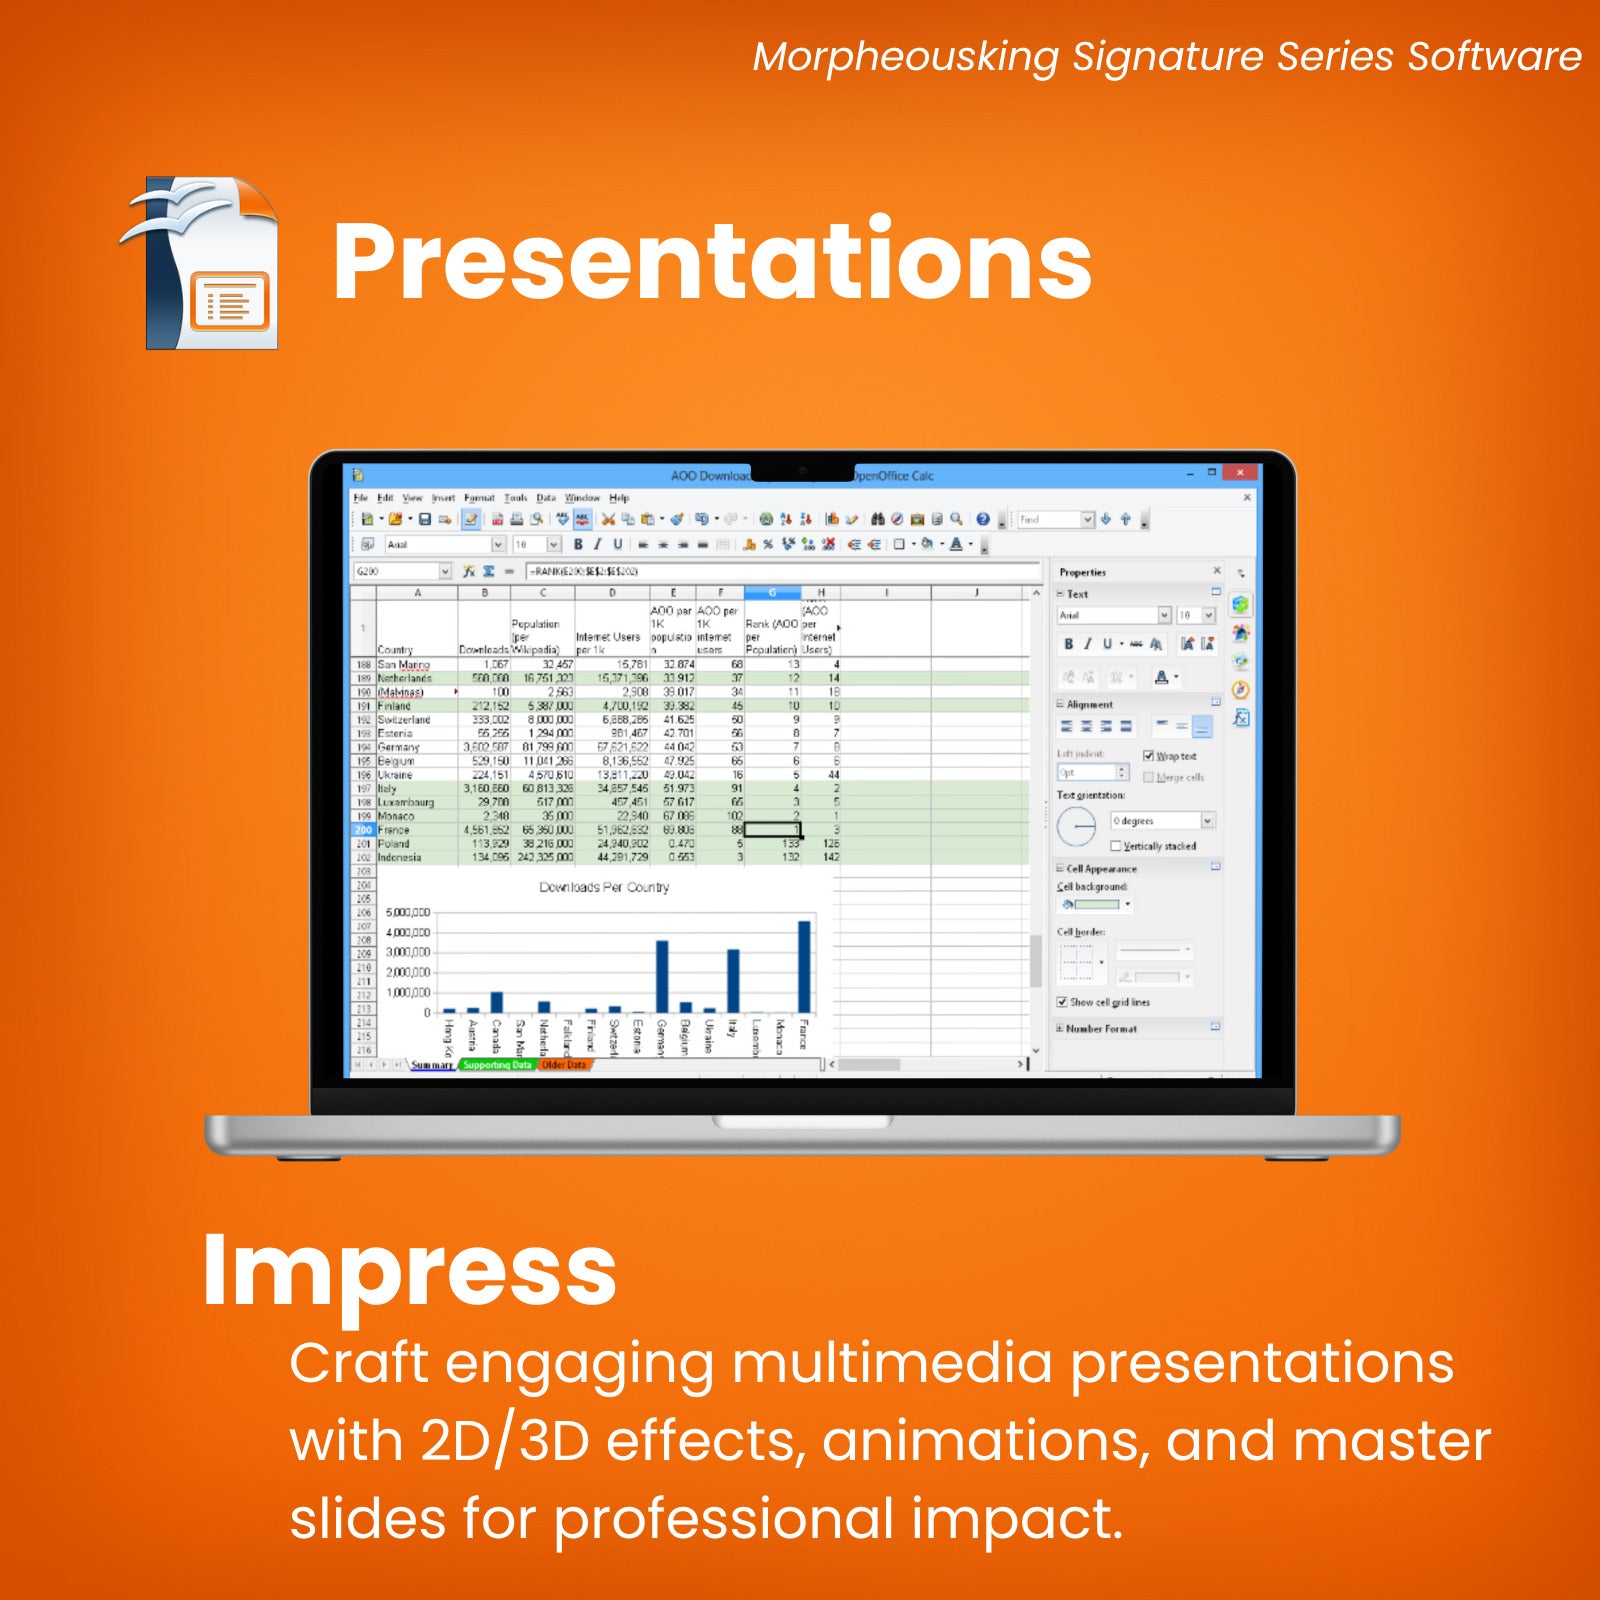 Apache Open Office Impress - Create Engaging Multimedia Presentations